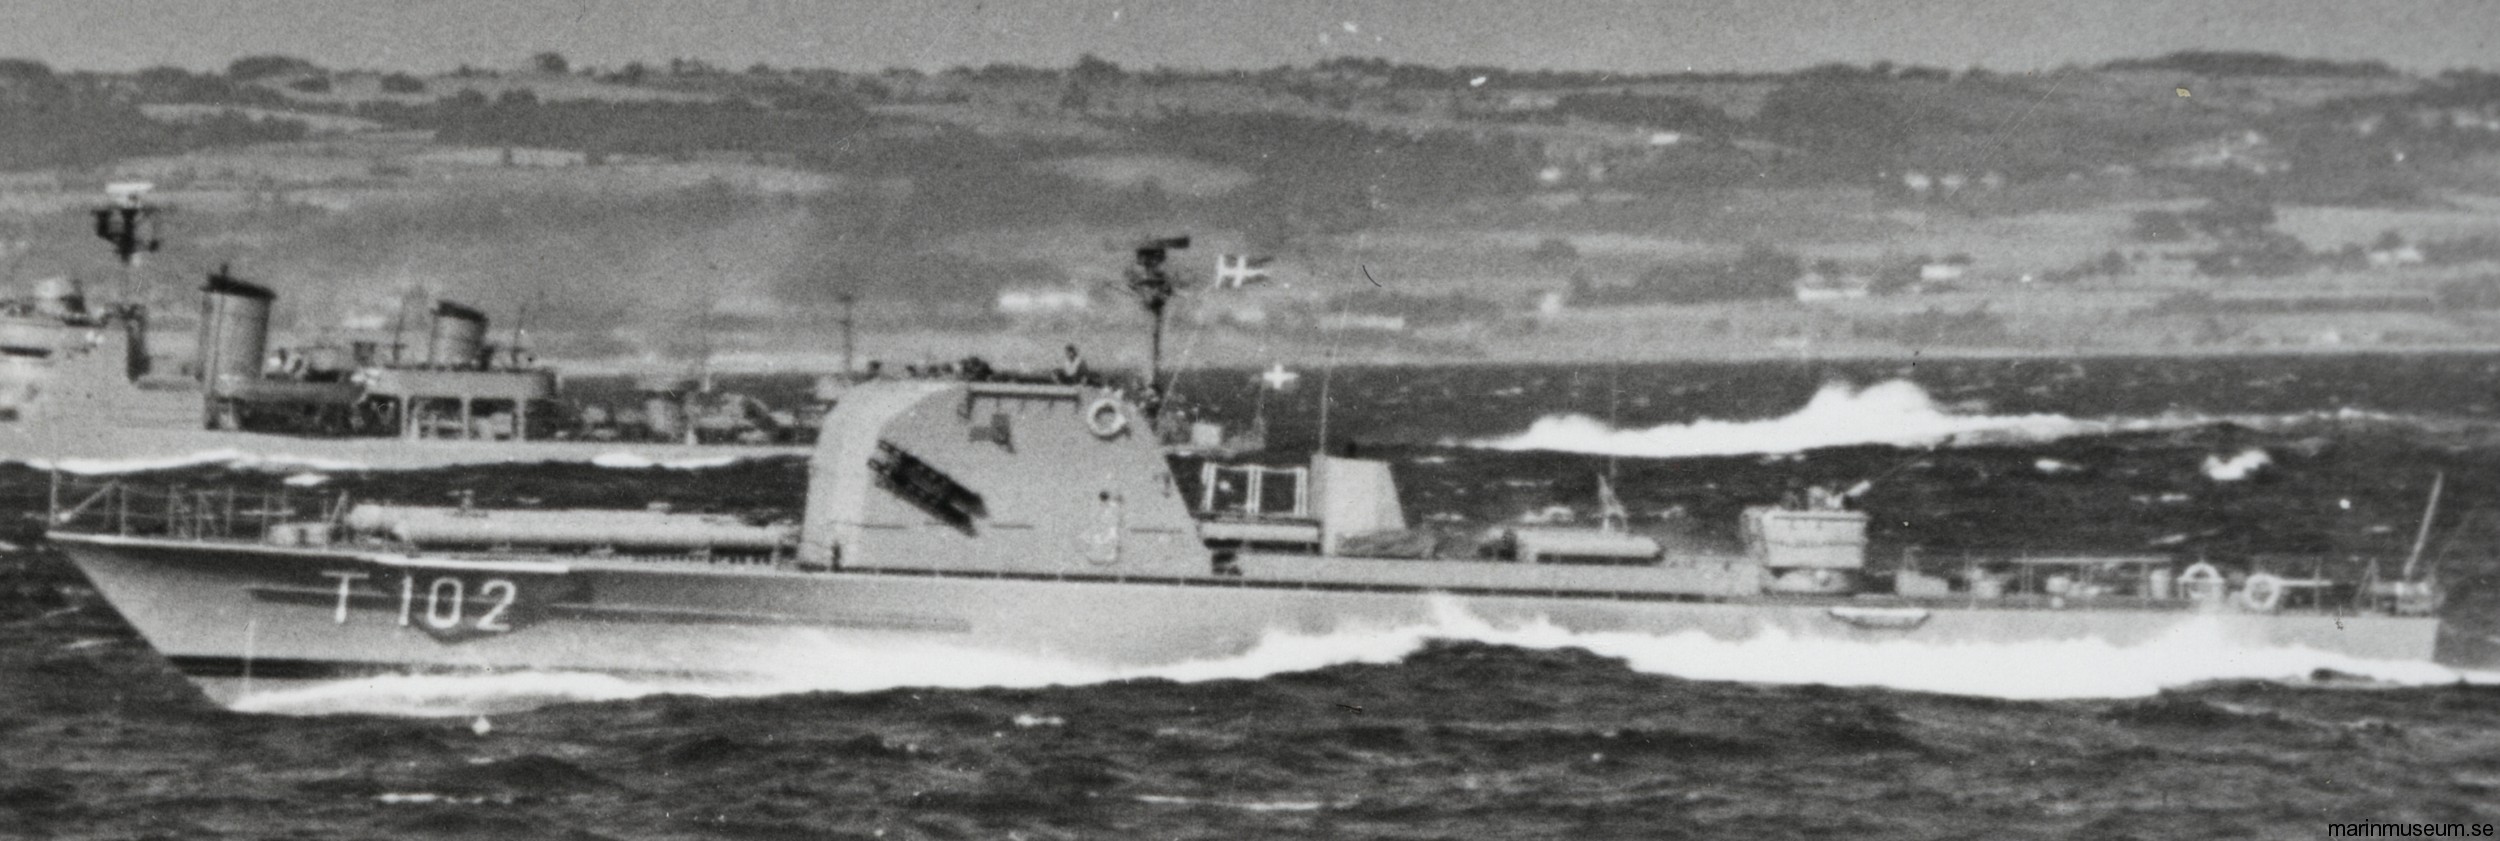 t102 plejad hms hswms class fast attack craft torpedo boat vessel swedish navy svenska marinen 06